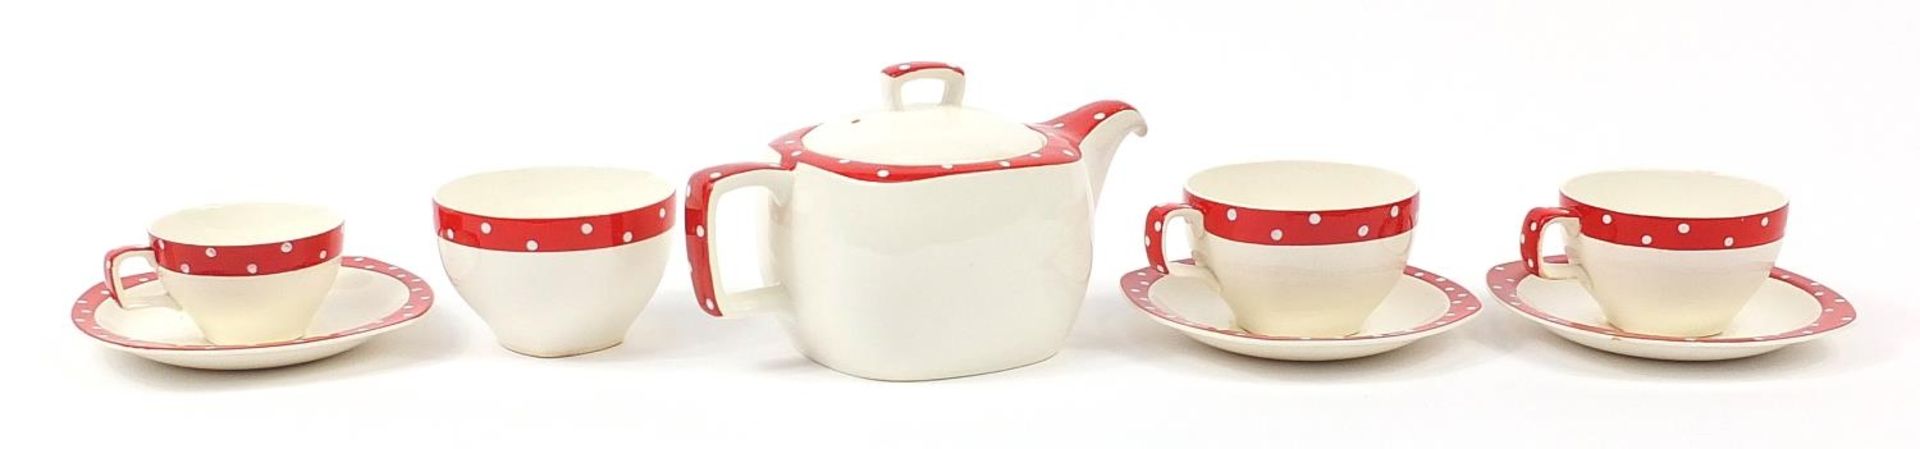 Midwinter Stylecraft Polka Dot pattern part tea service, the teapot 21cm in length - Image 4 of 6